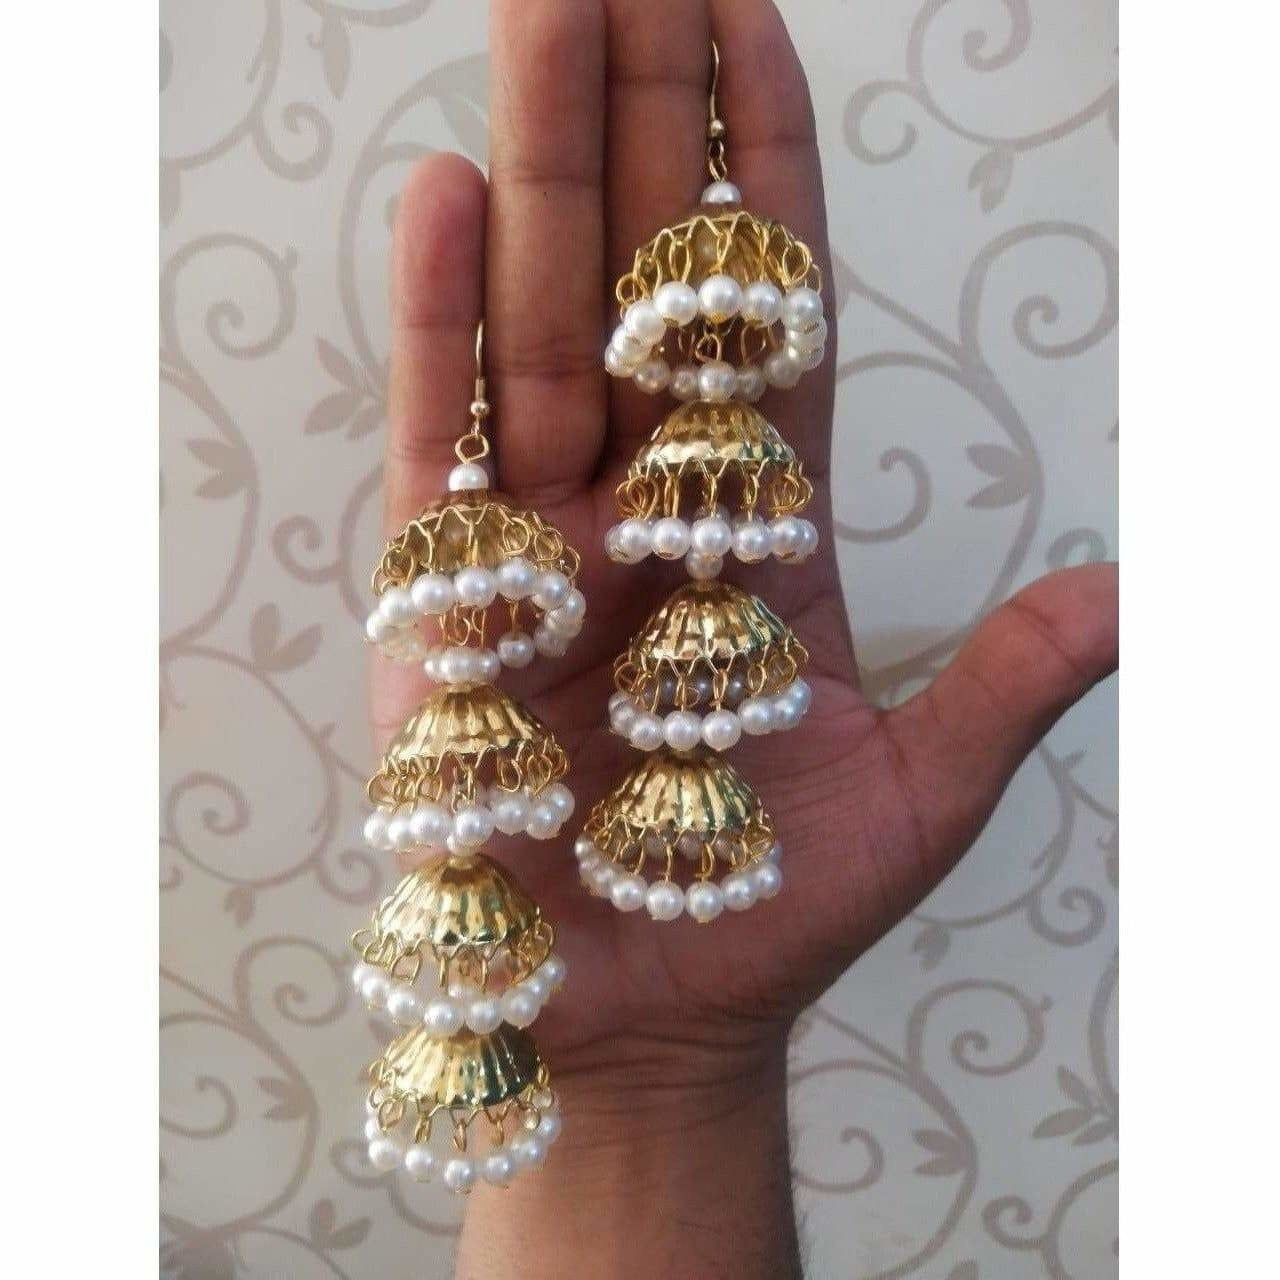 Pearl dangler earrings at ₹1650 | Azilaa